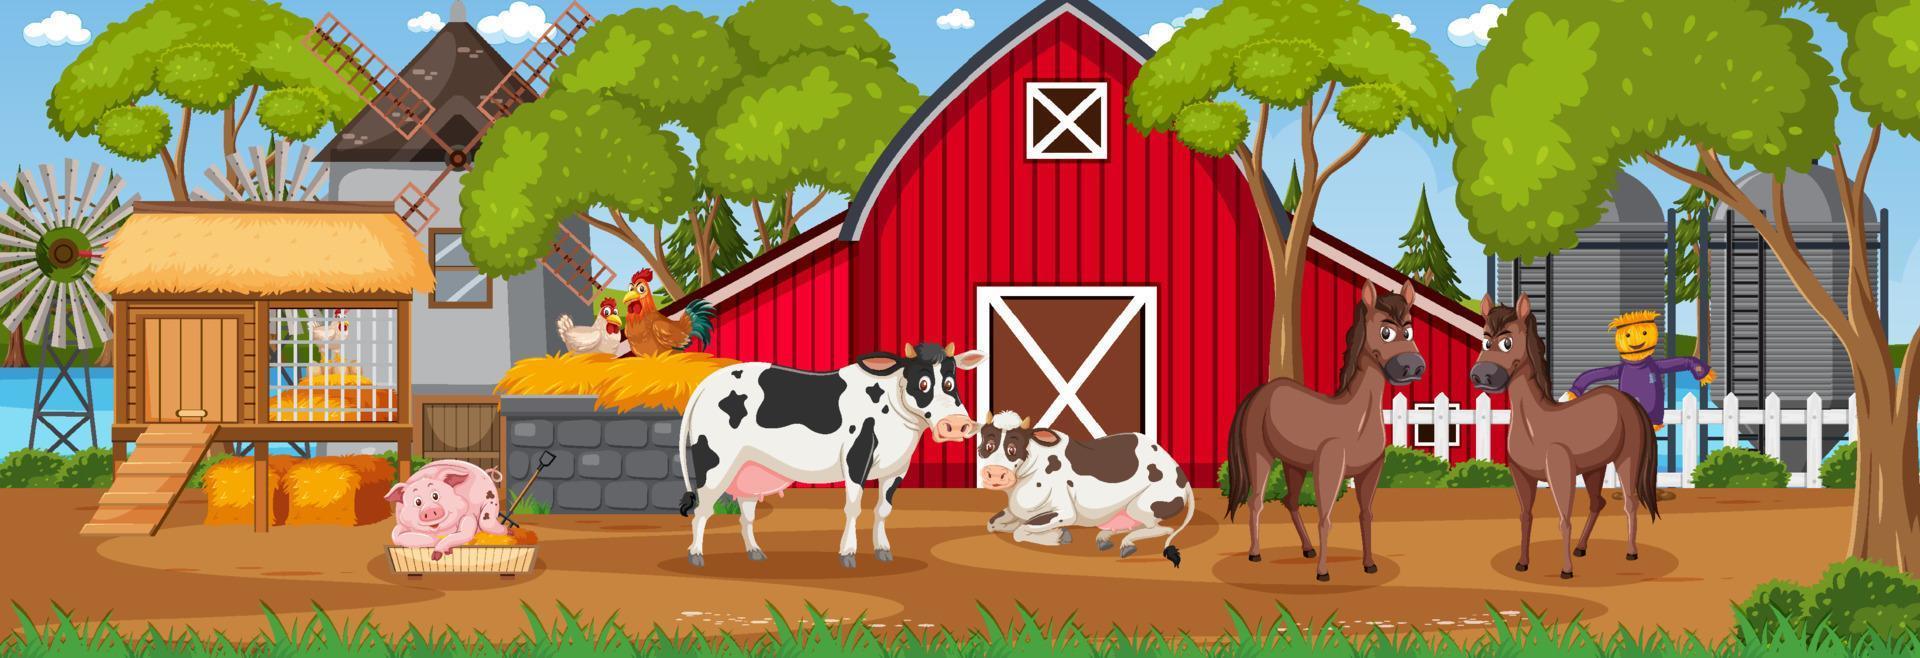 Farm horizontal landscape scene with farm animals vector